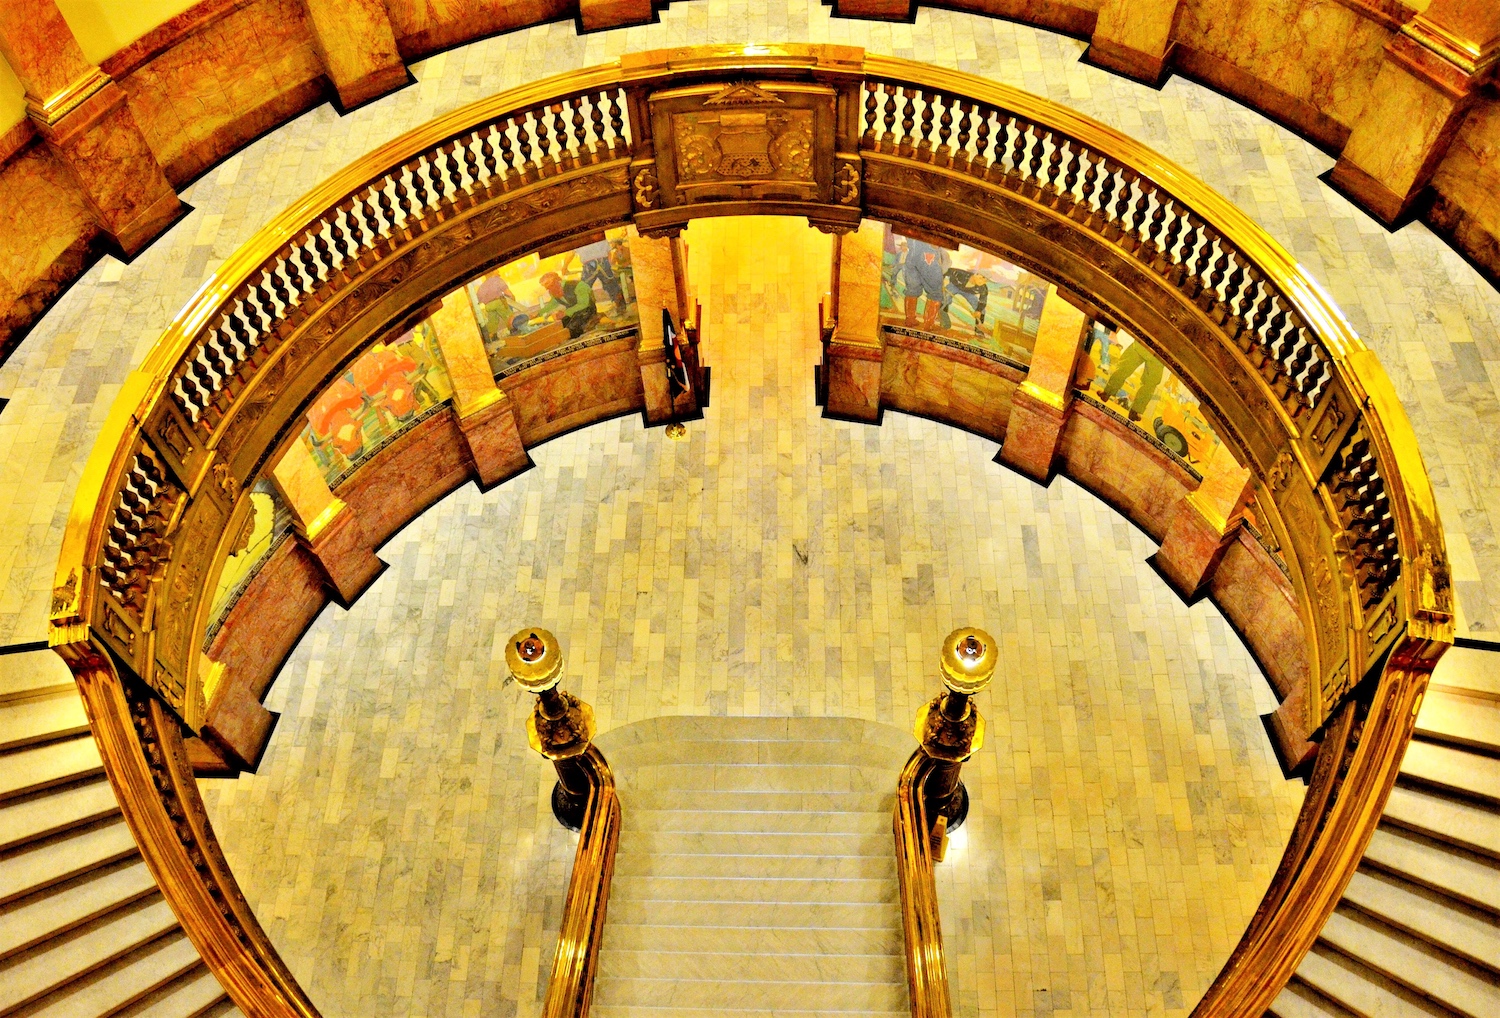 Colorado capitol rotunda from above. Editorial credit: Jim Lambert / Shutterstock.com